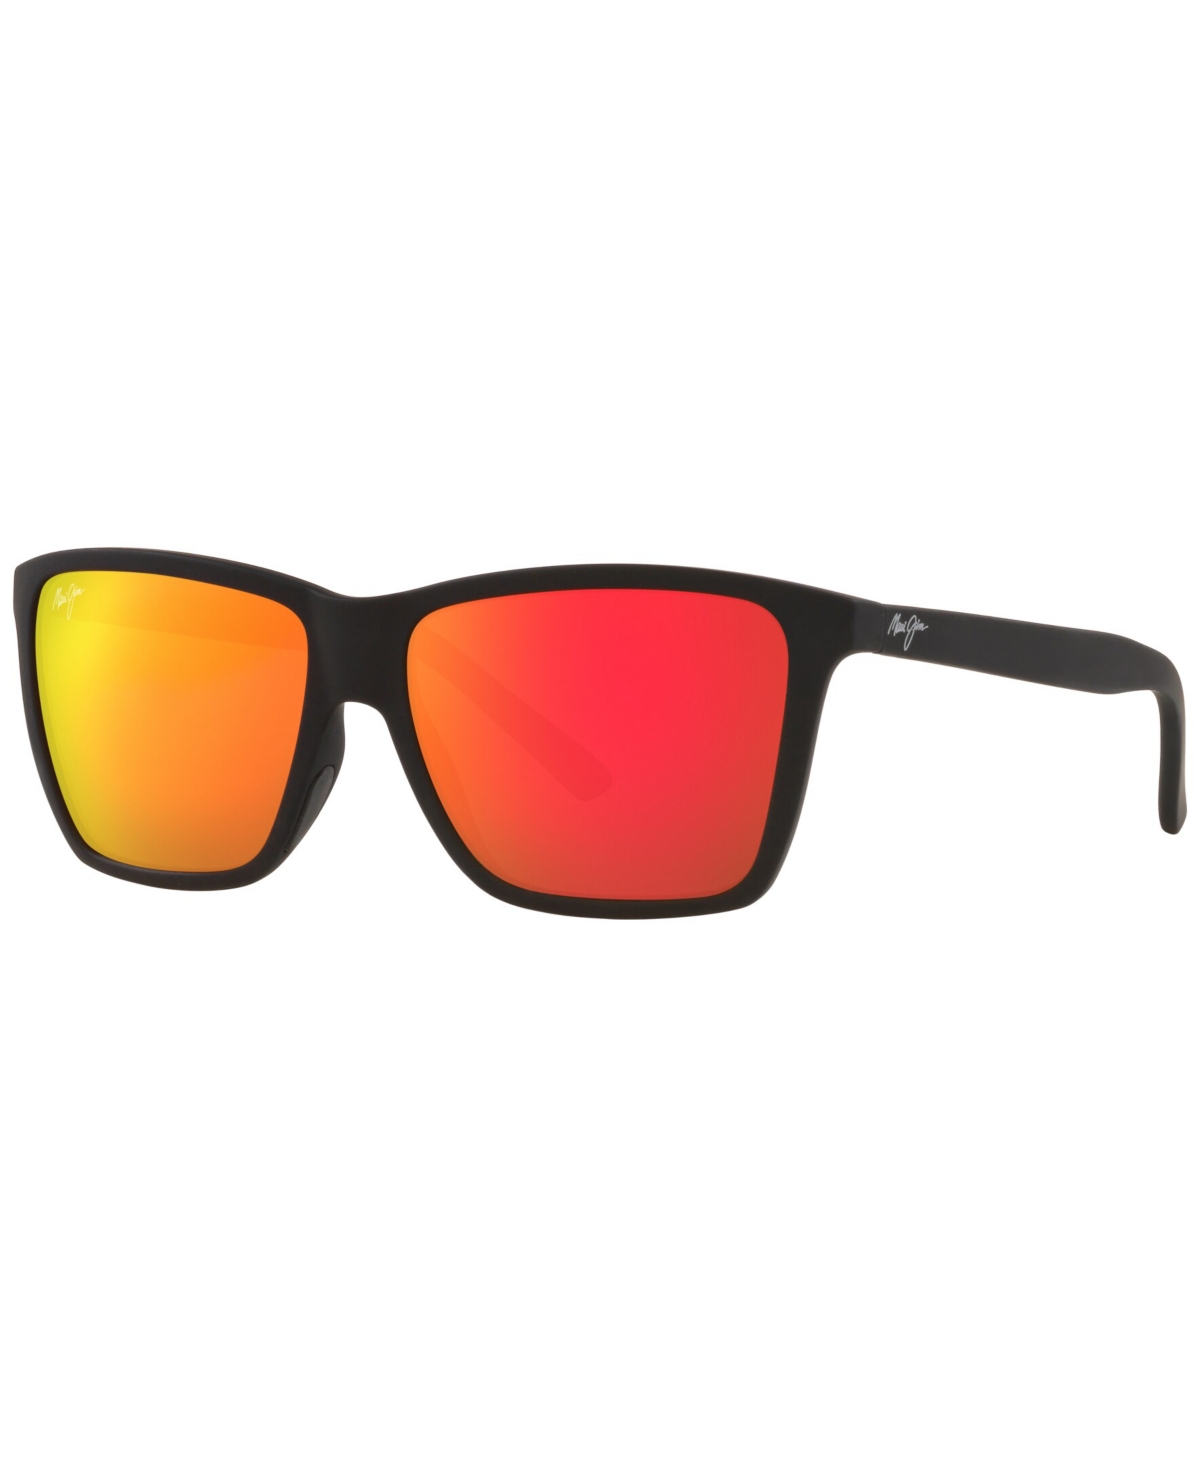 Men's Polarized Sunglasses, MJ000672 Cruzem 57 - Black Matte